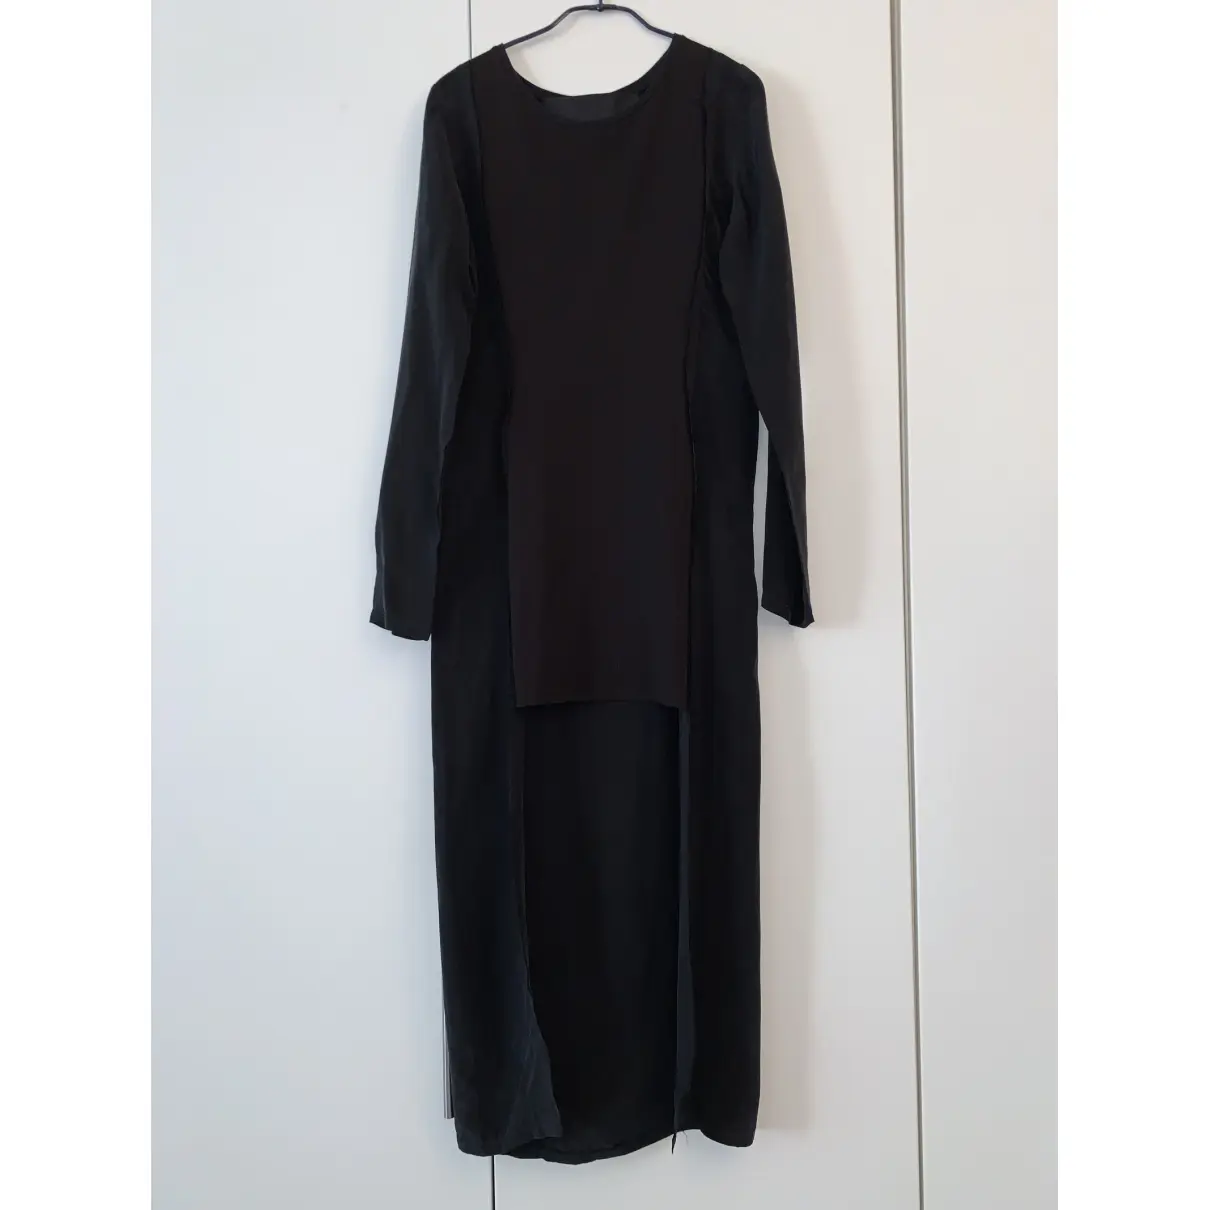 Avelon Mid-length dress for sale